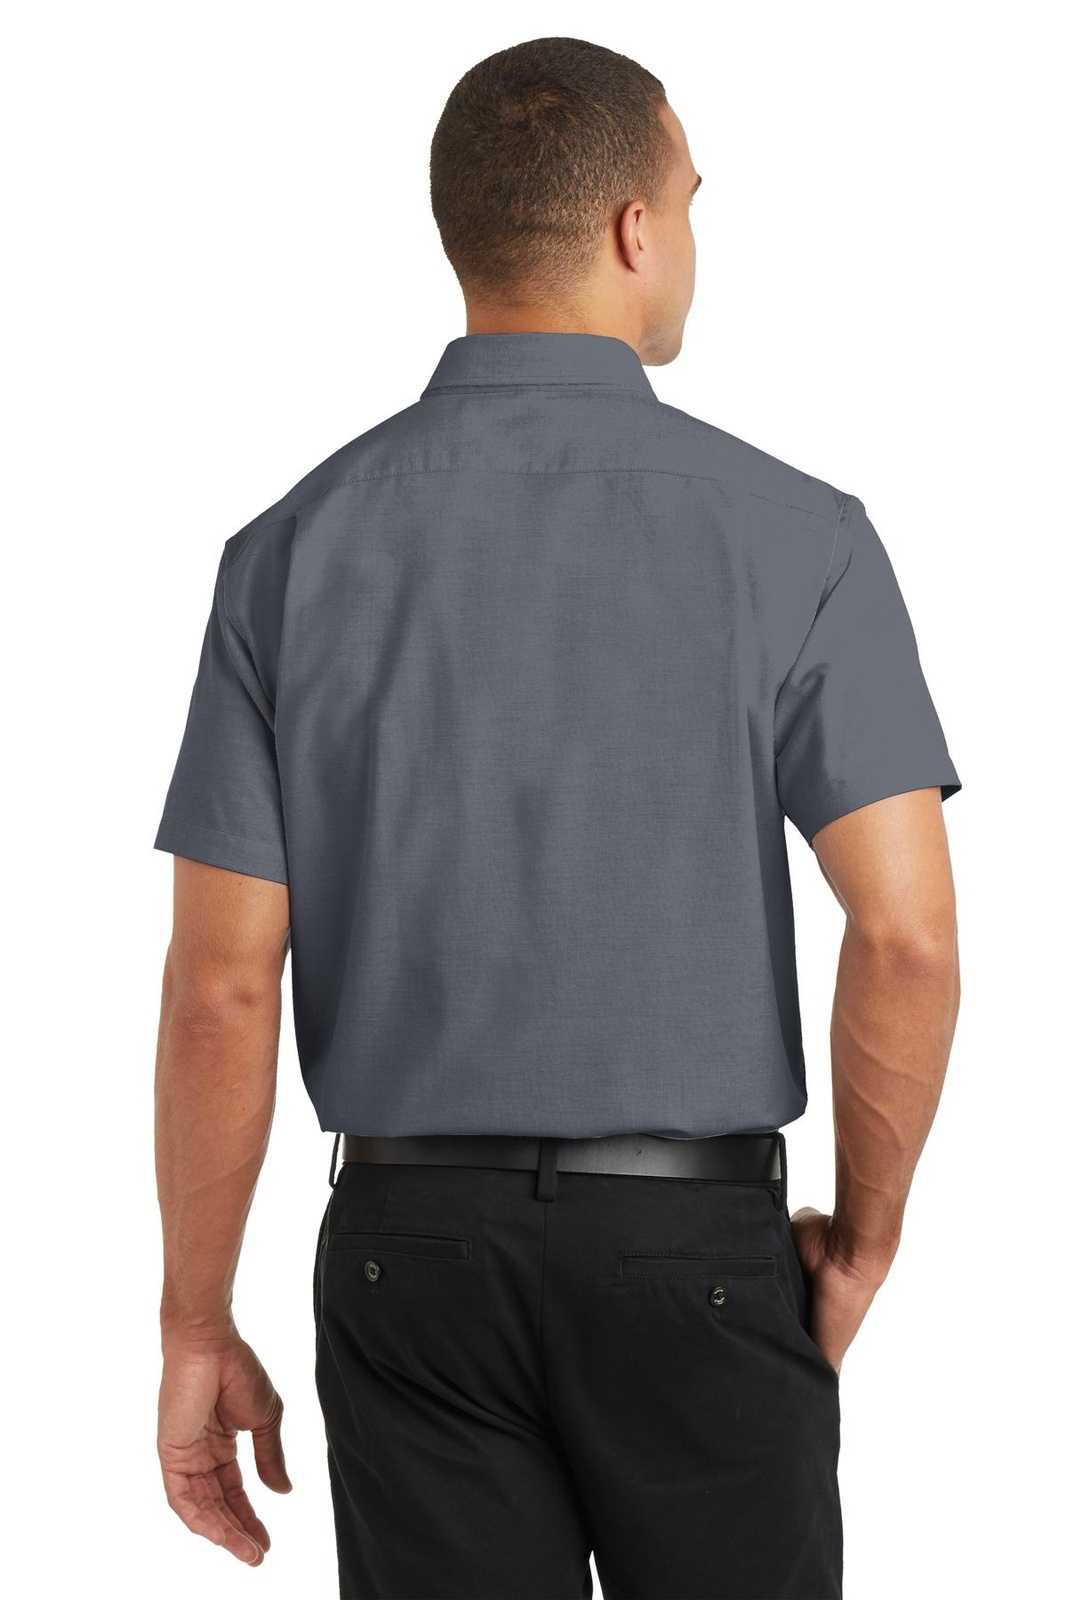 Port Authority S659 Short Sleeve Superpro Oxford Shirt - Black - HIT a Double - 2